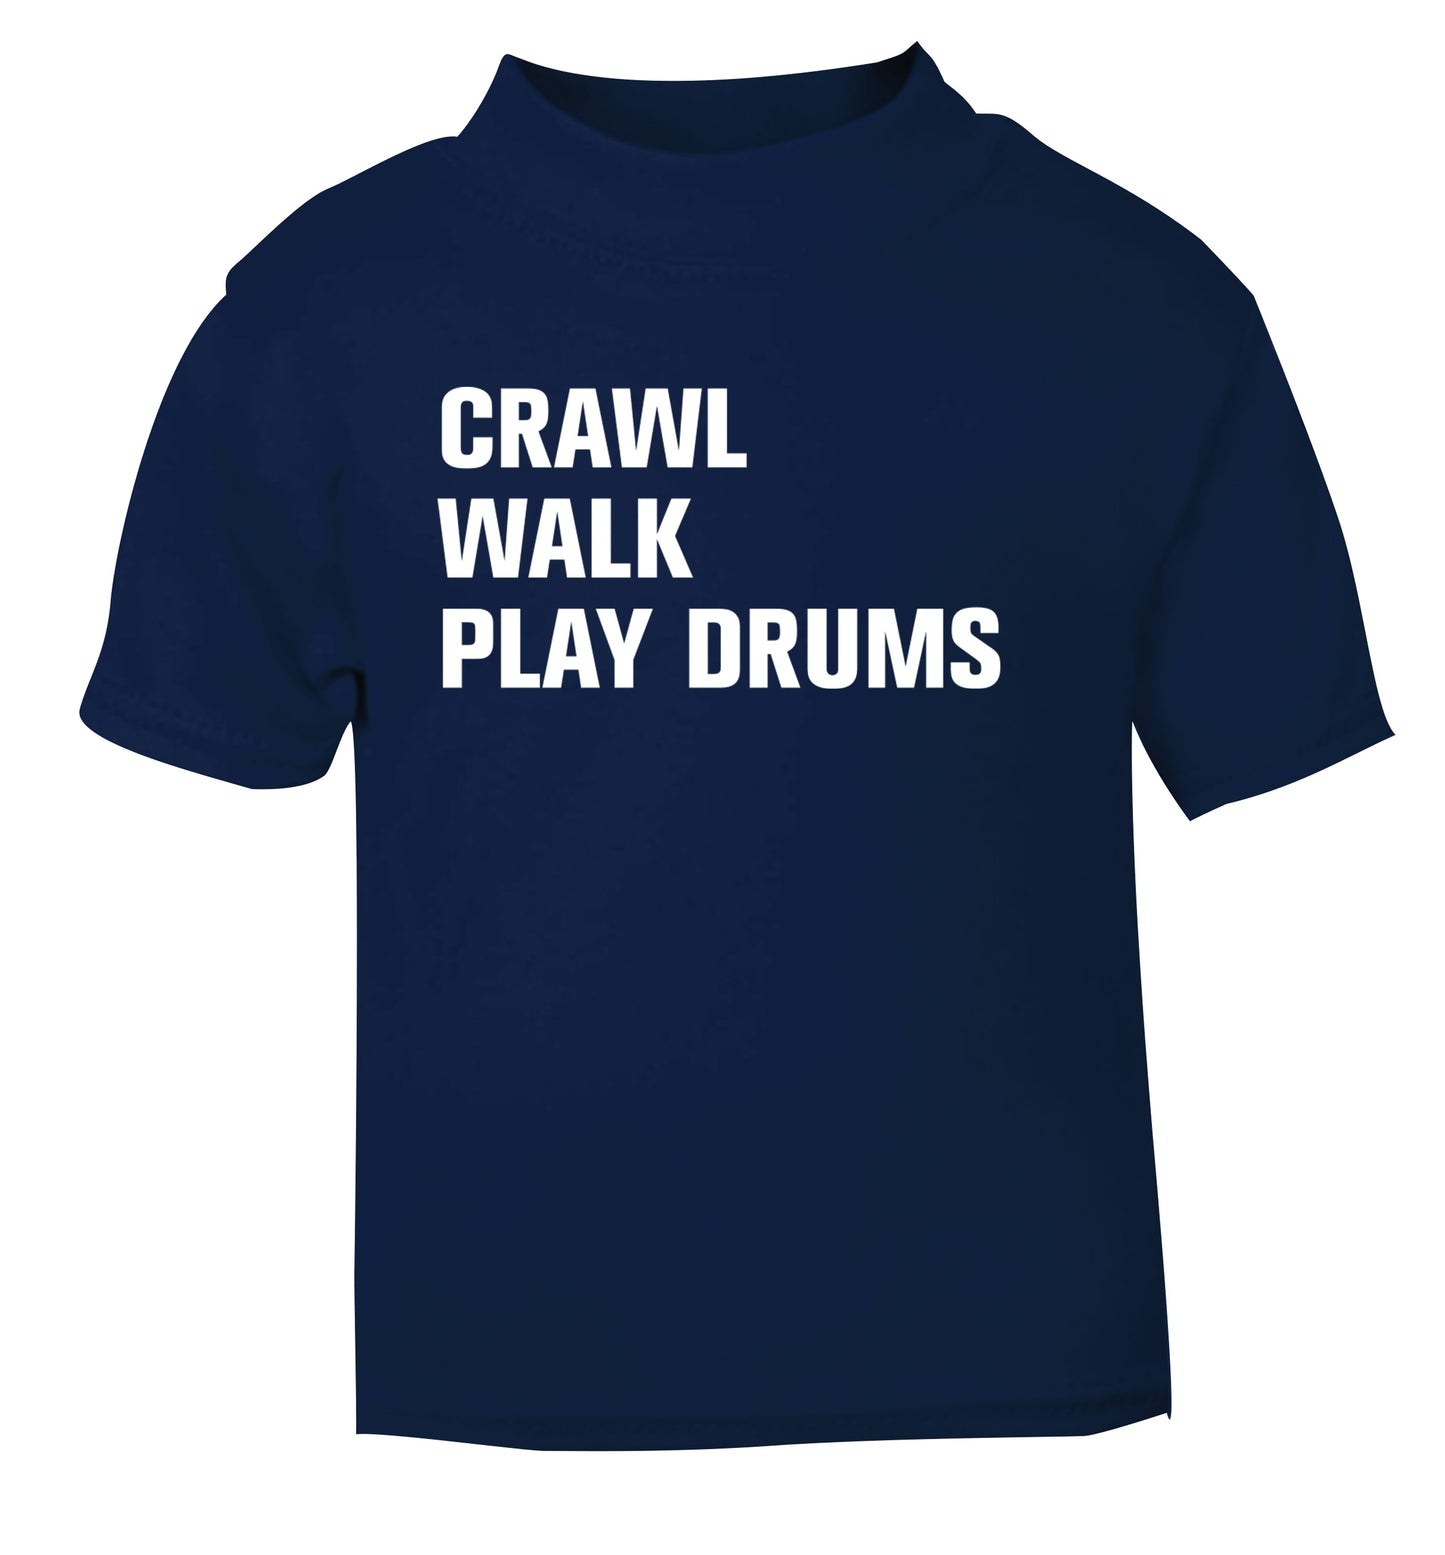 Crawl walk play drums navy Baby Toddler Tshirt 2 Years